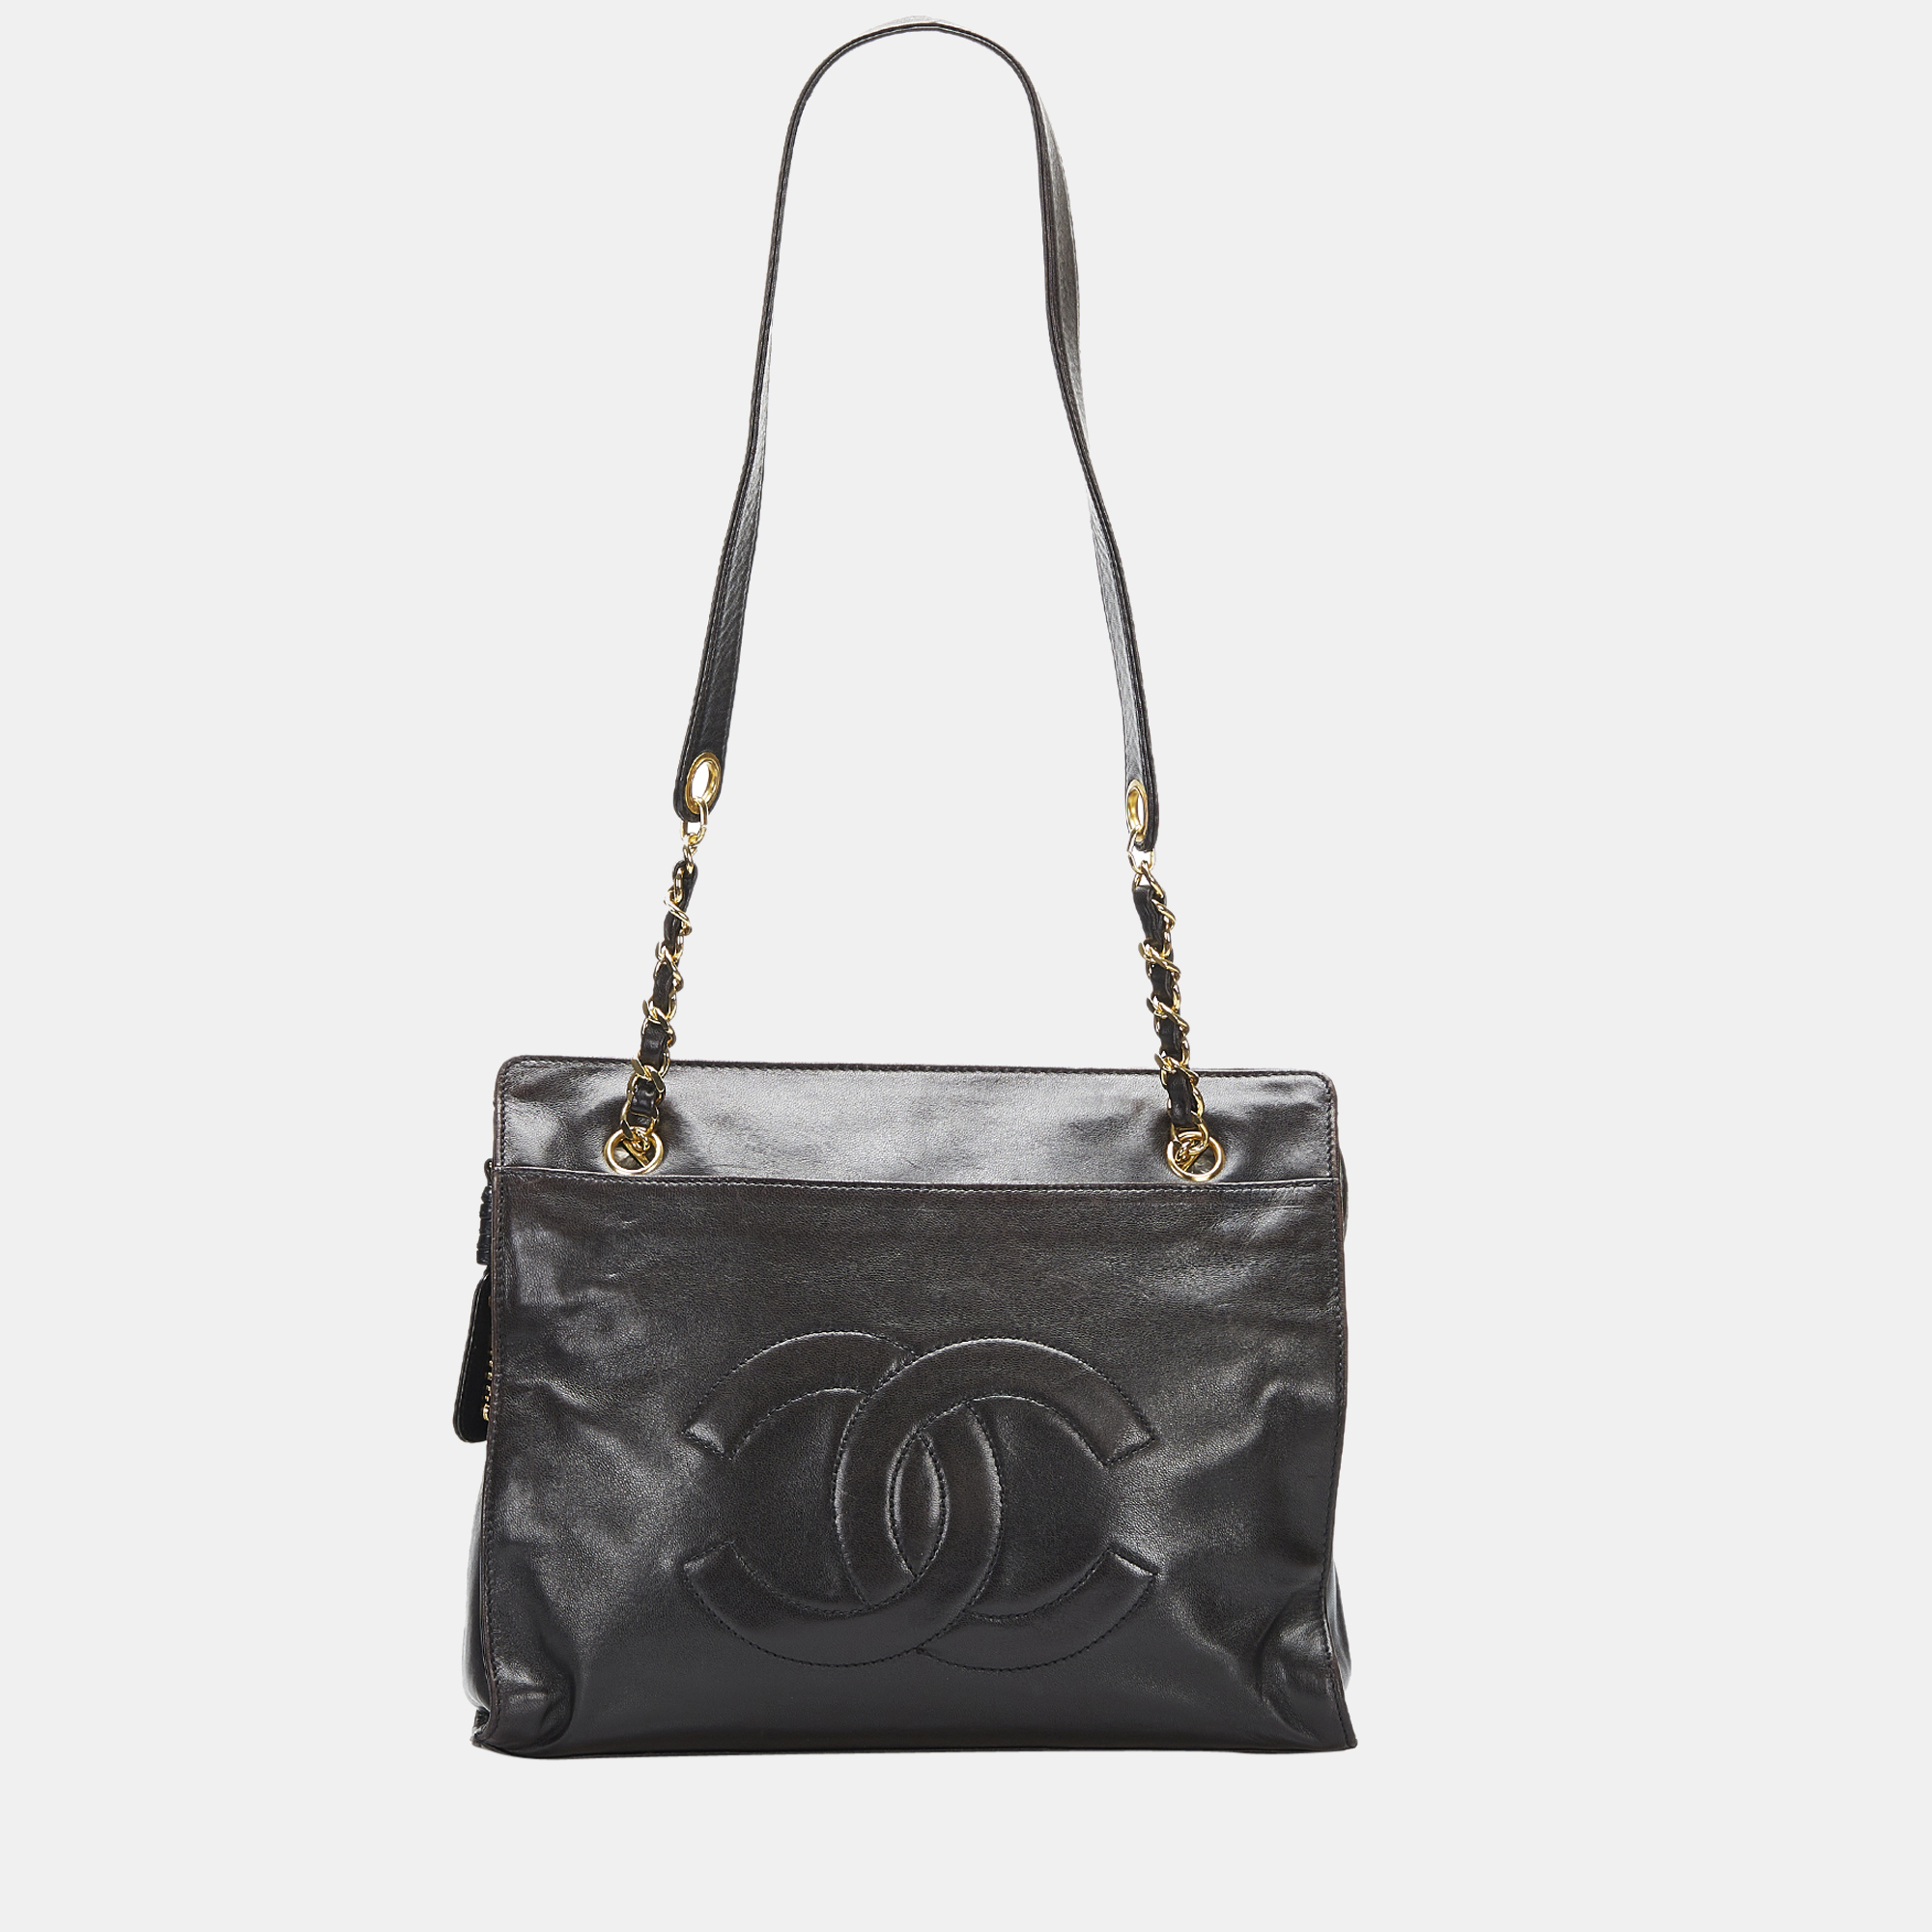 Pre-owned Chanel Black Cc Chain Tote Bag